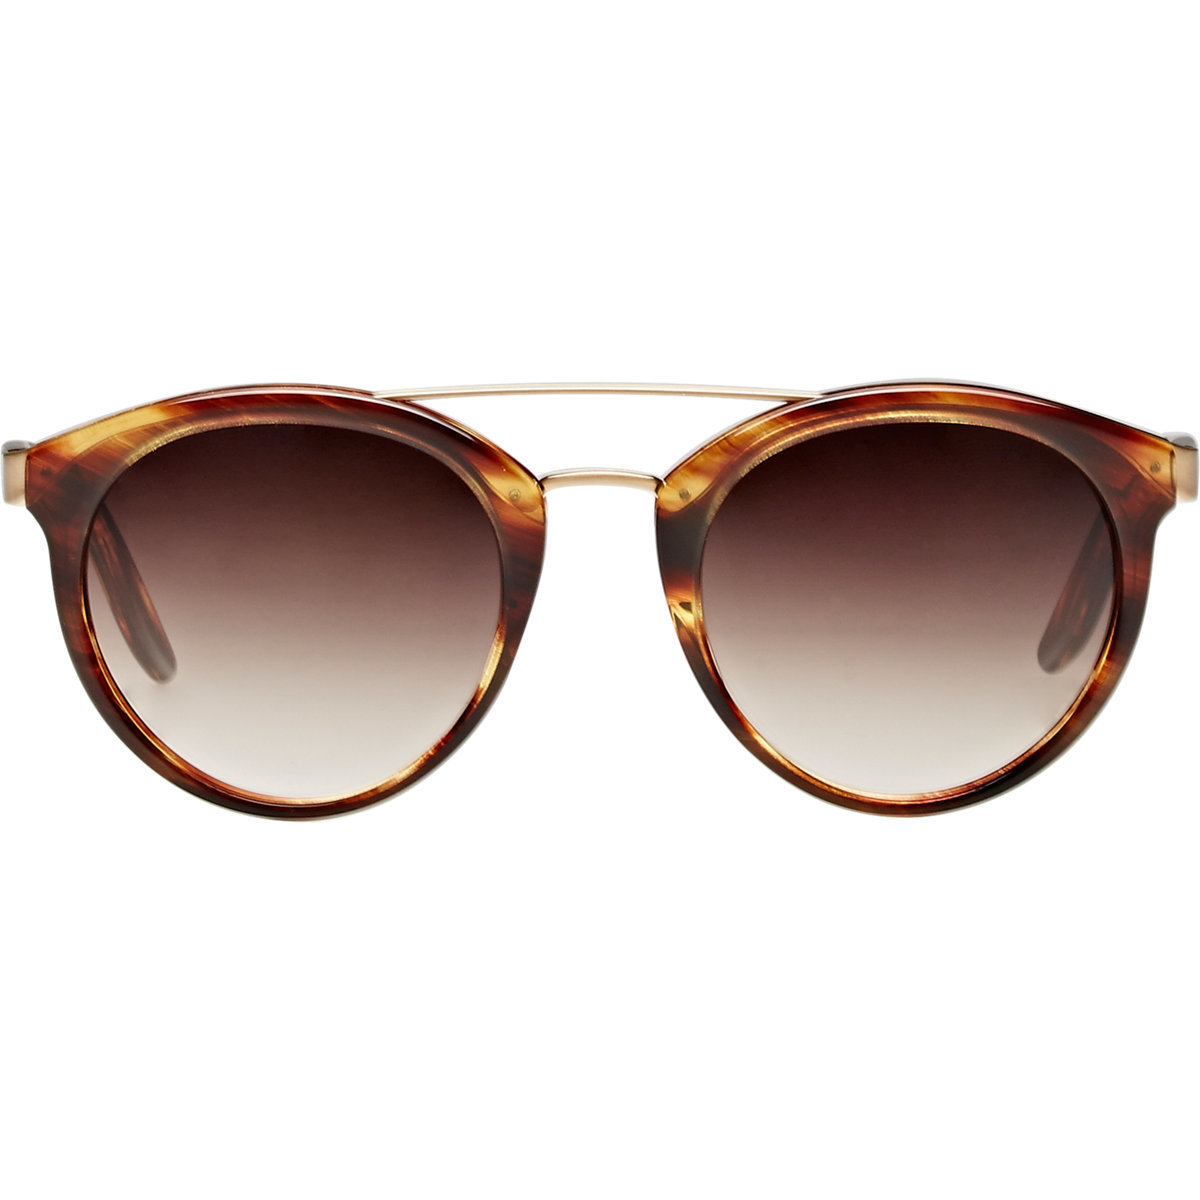 Lyst - Barton Perreira Women's Dalziel Sunglasses